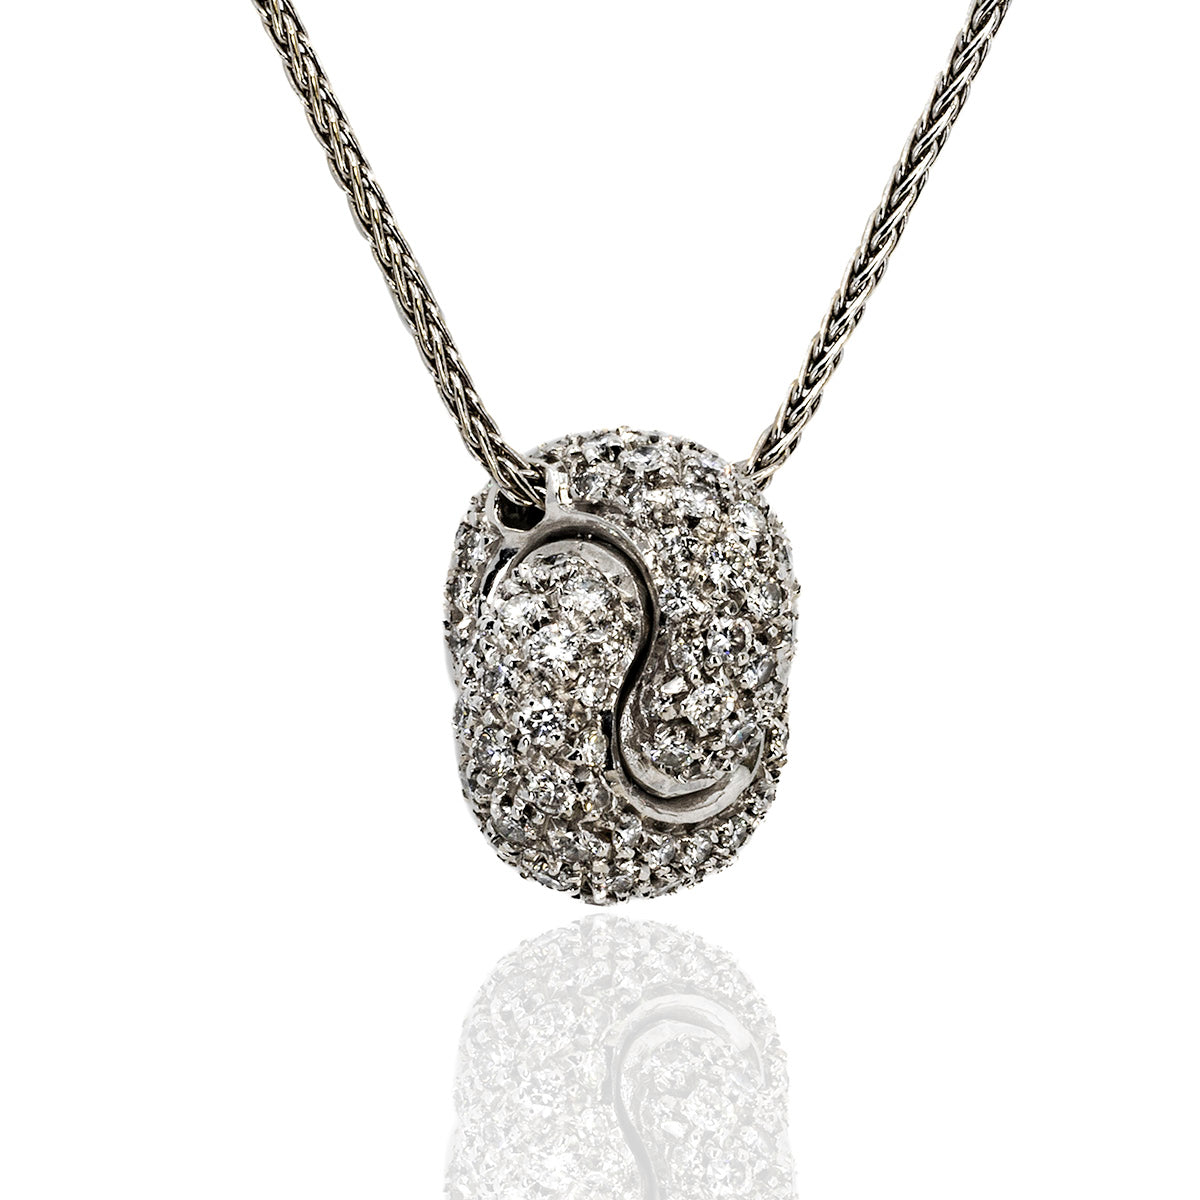 Buy Infinity Necklace, Diamond Pendant Necklace, White Gold Necklace,  Infinity Knot Necklace, Gold Pendant, Handmade Jewelry Online in India -  Etsy